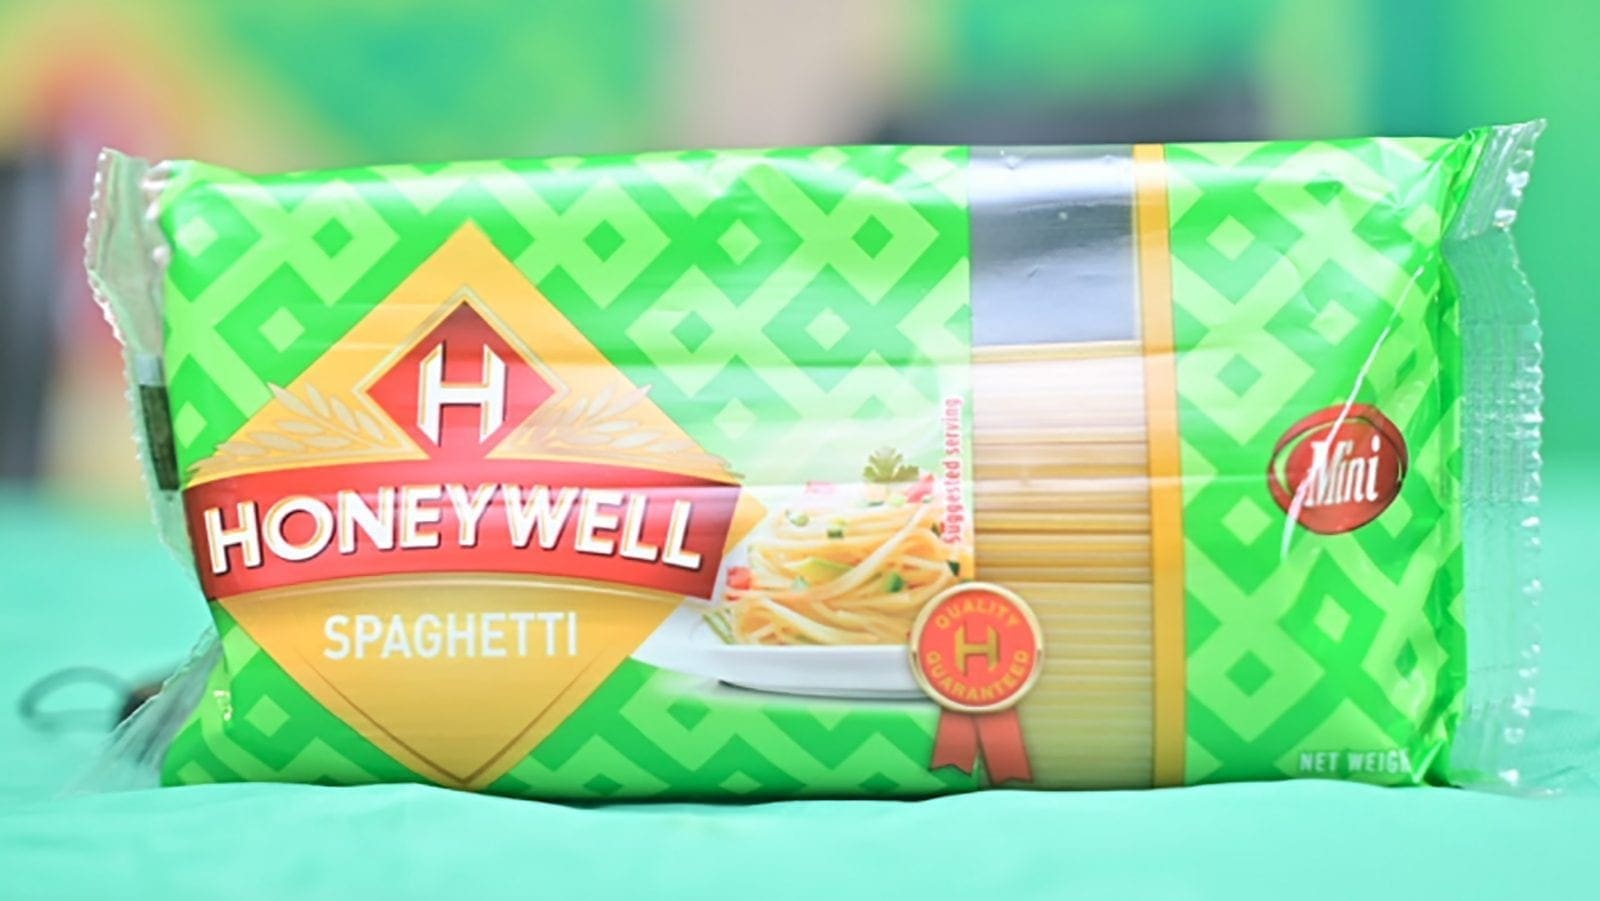 Ecobank raises alarm over Flour Mills of Nigeria’s planned acquisition of Honeywell Flour Mills